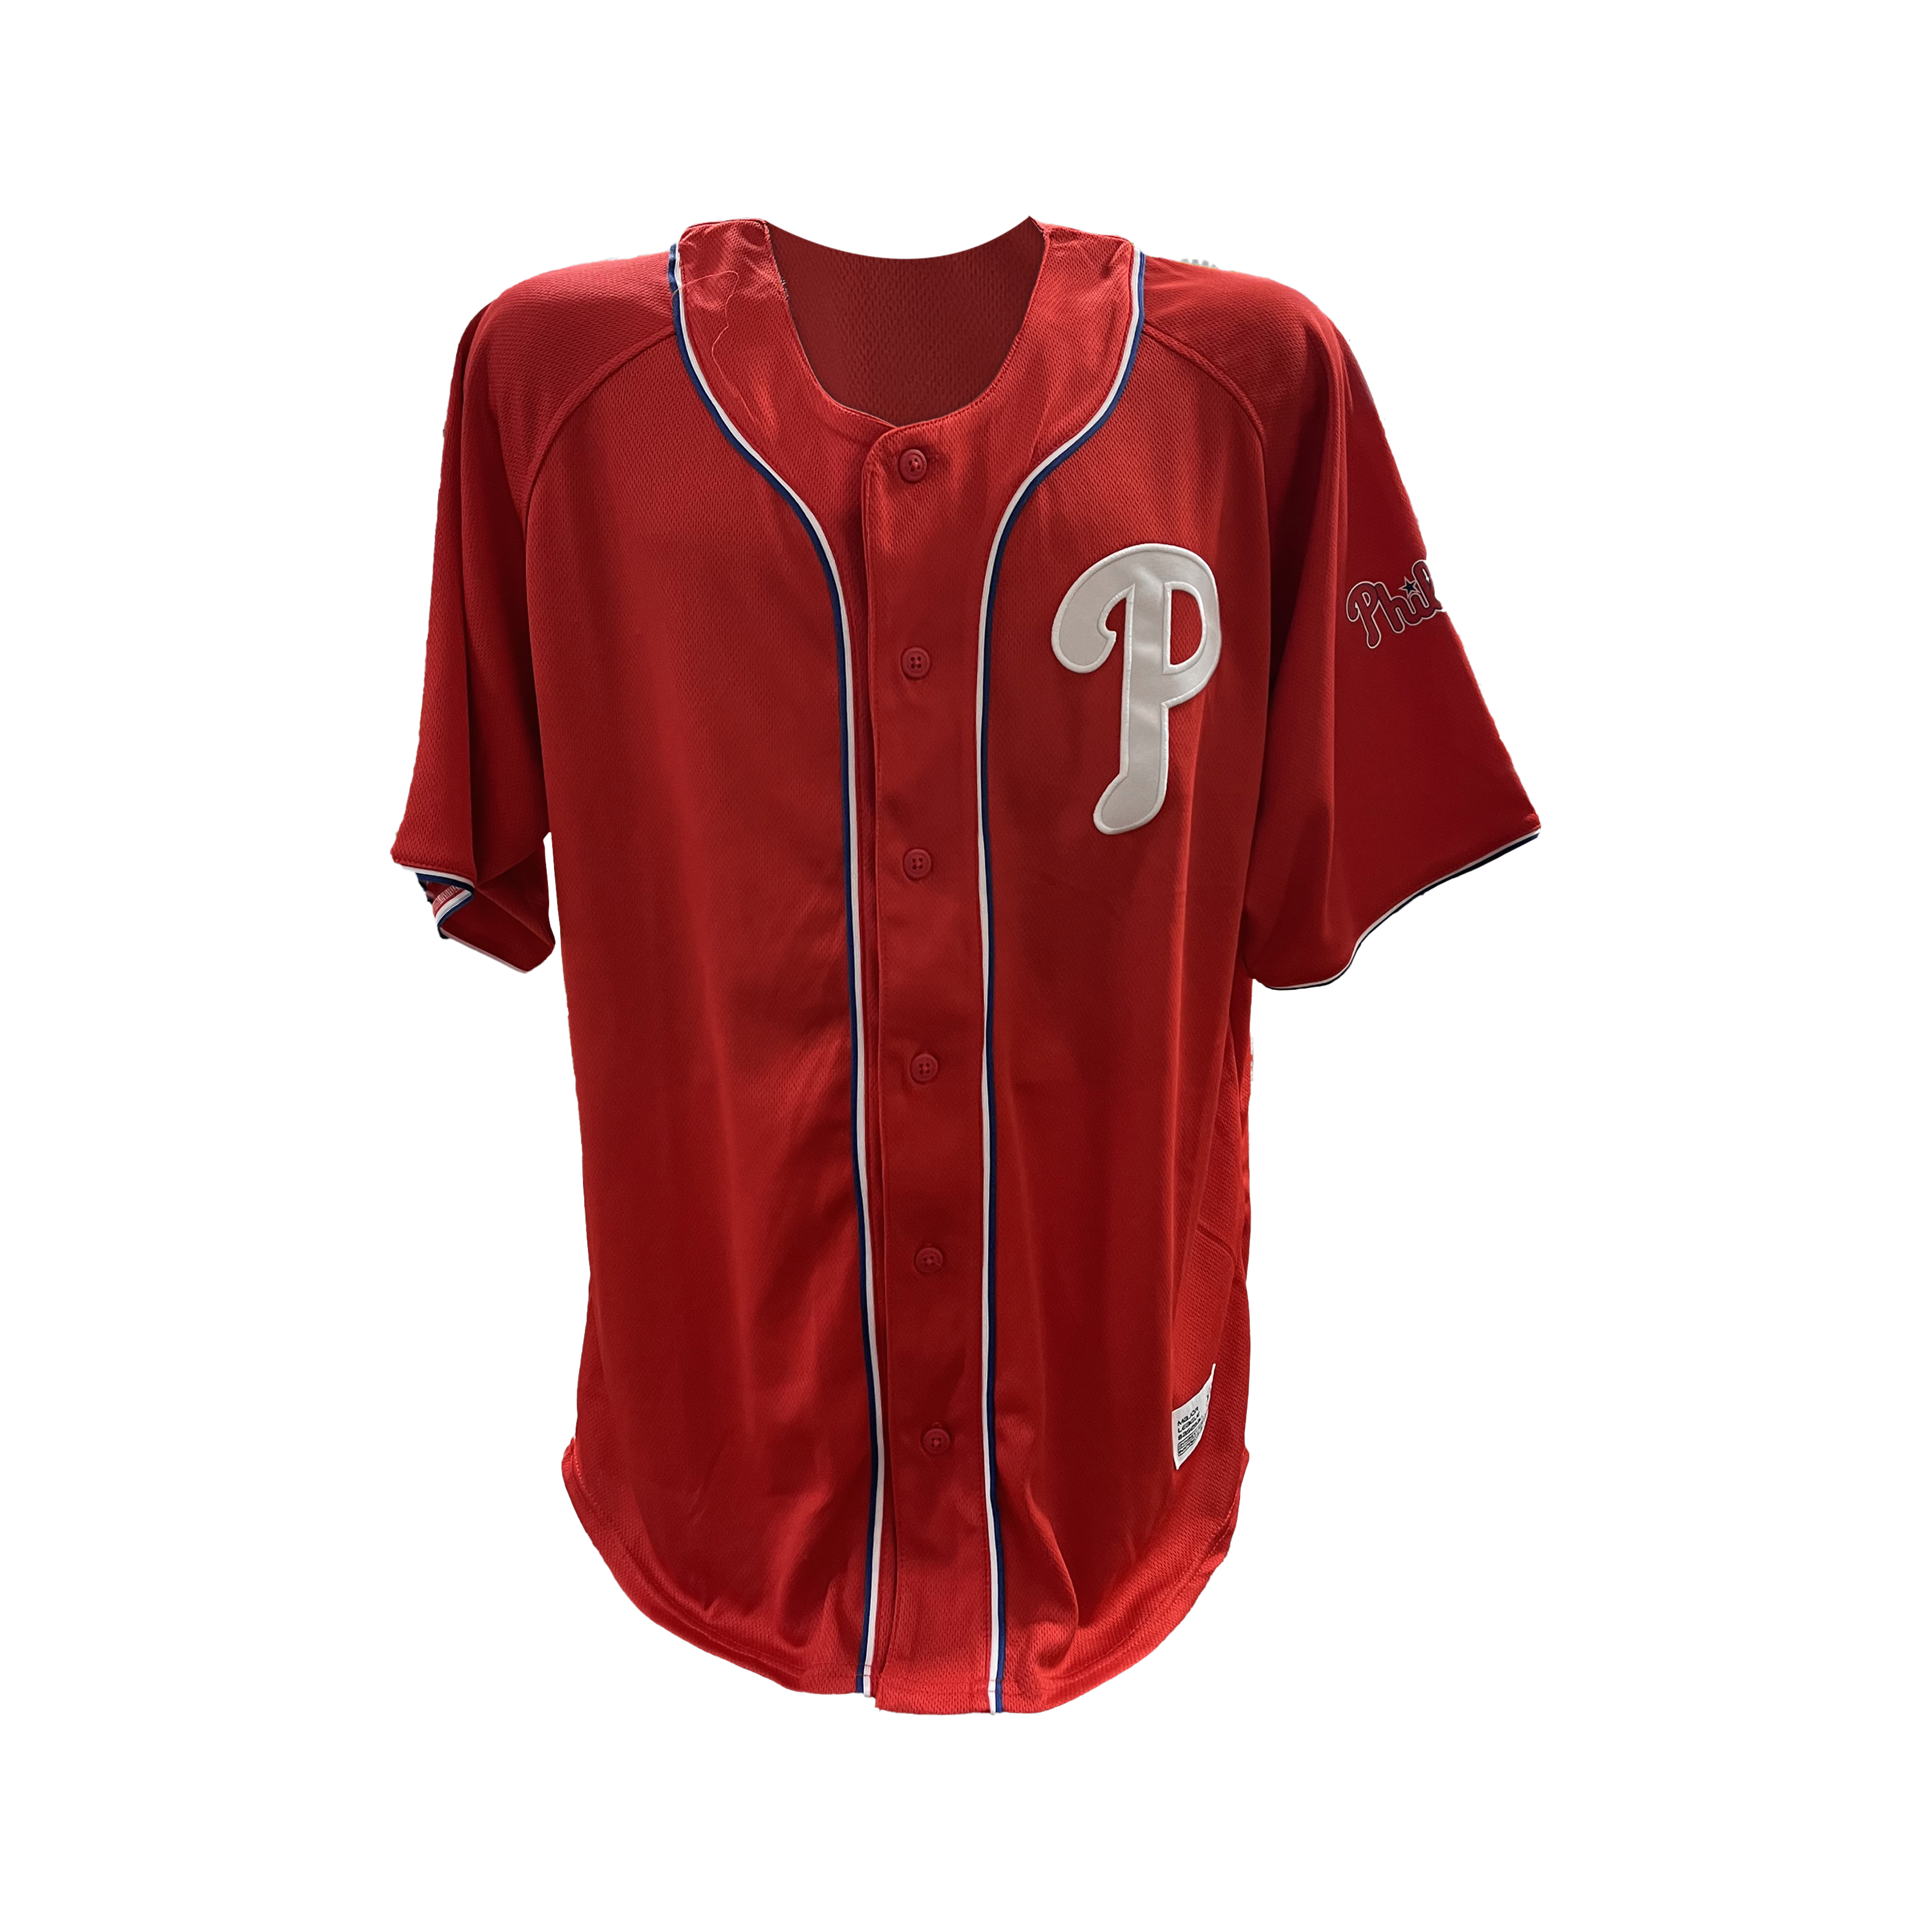 Philadelphia Phillies Team Shop 